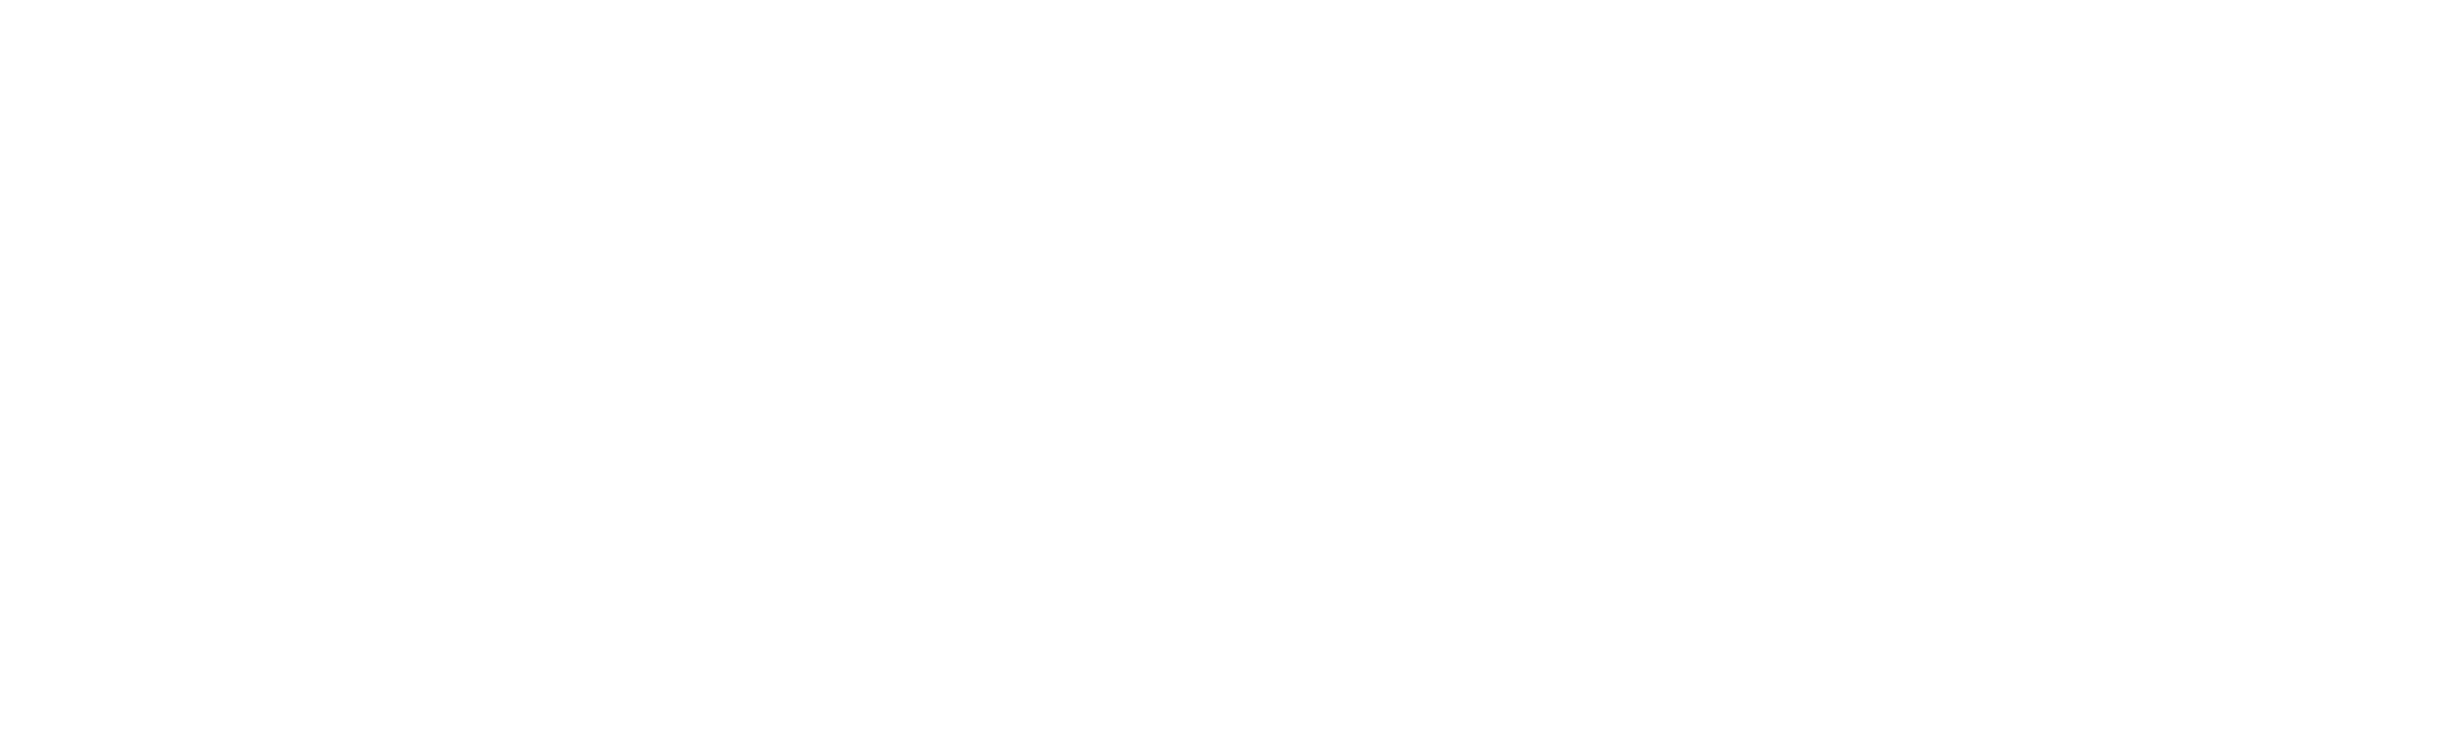 Oklahoma State Treasurer Logo